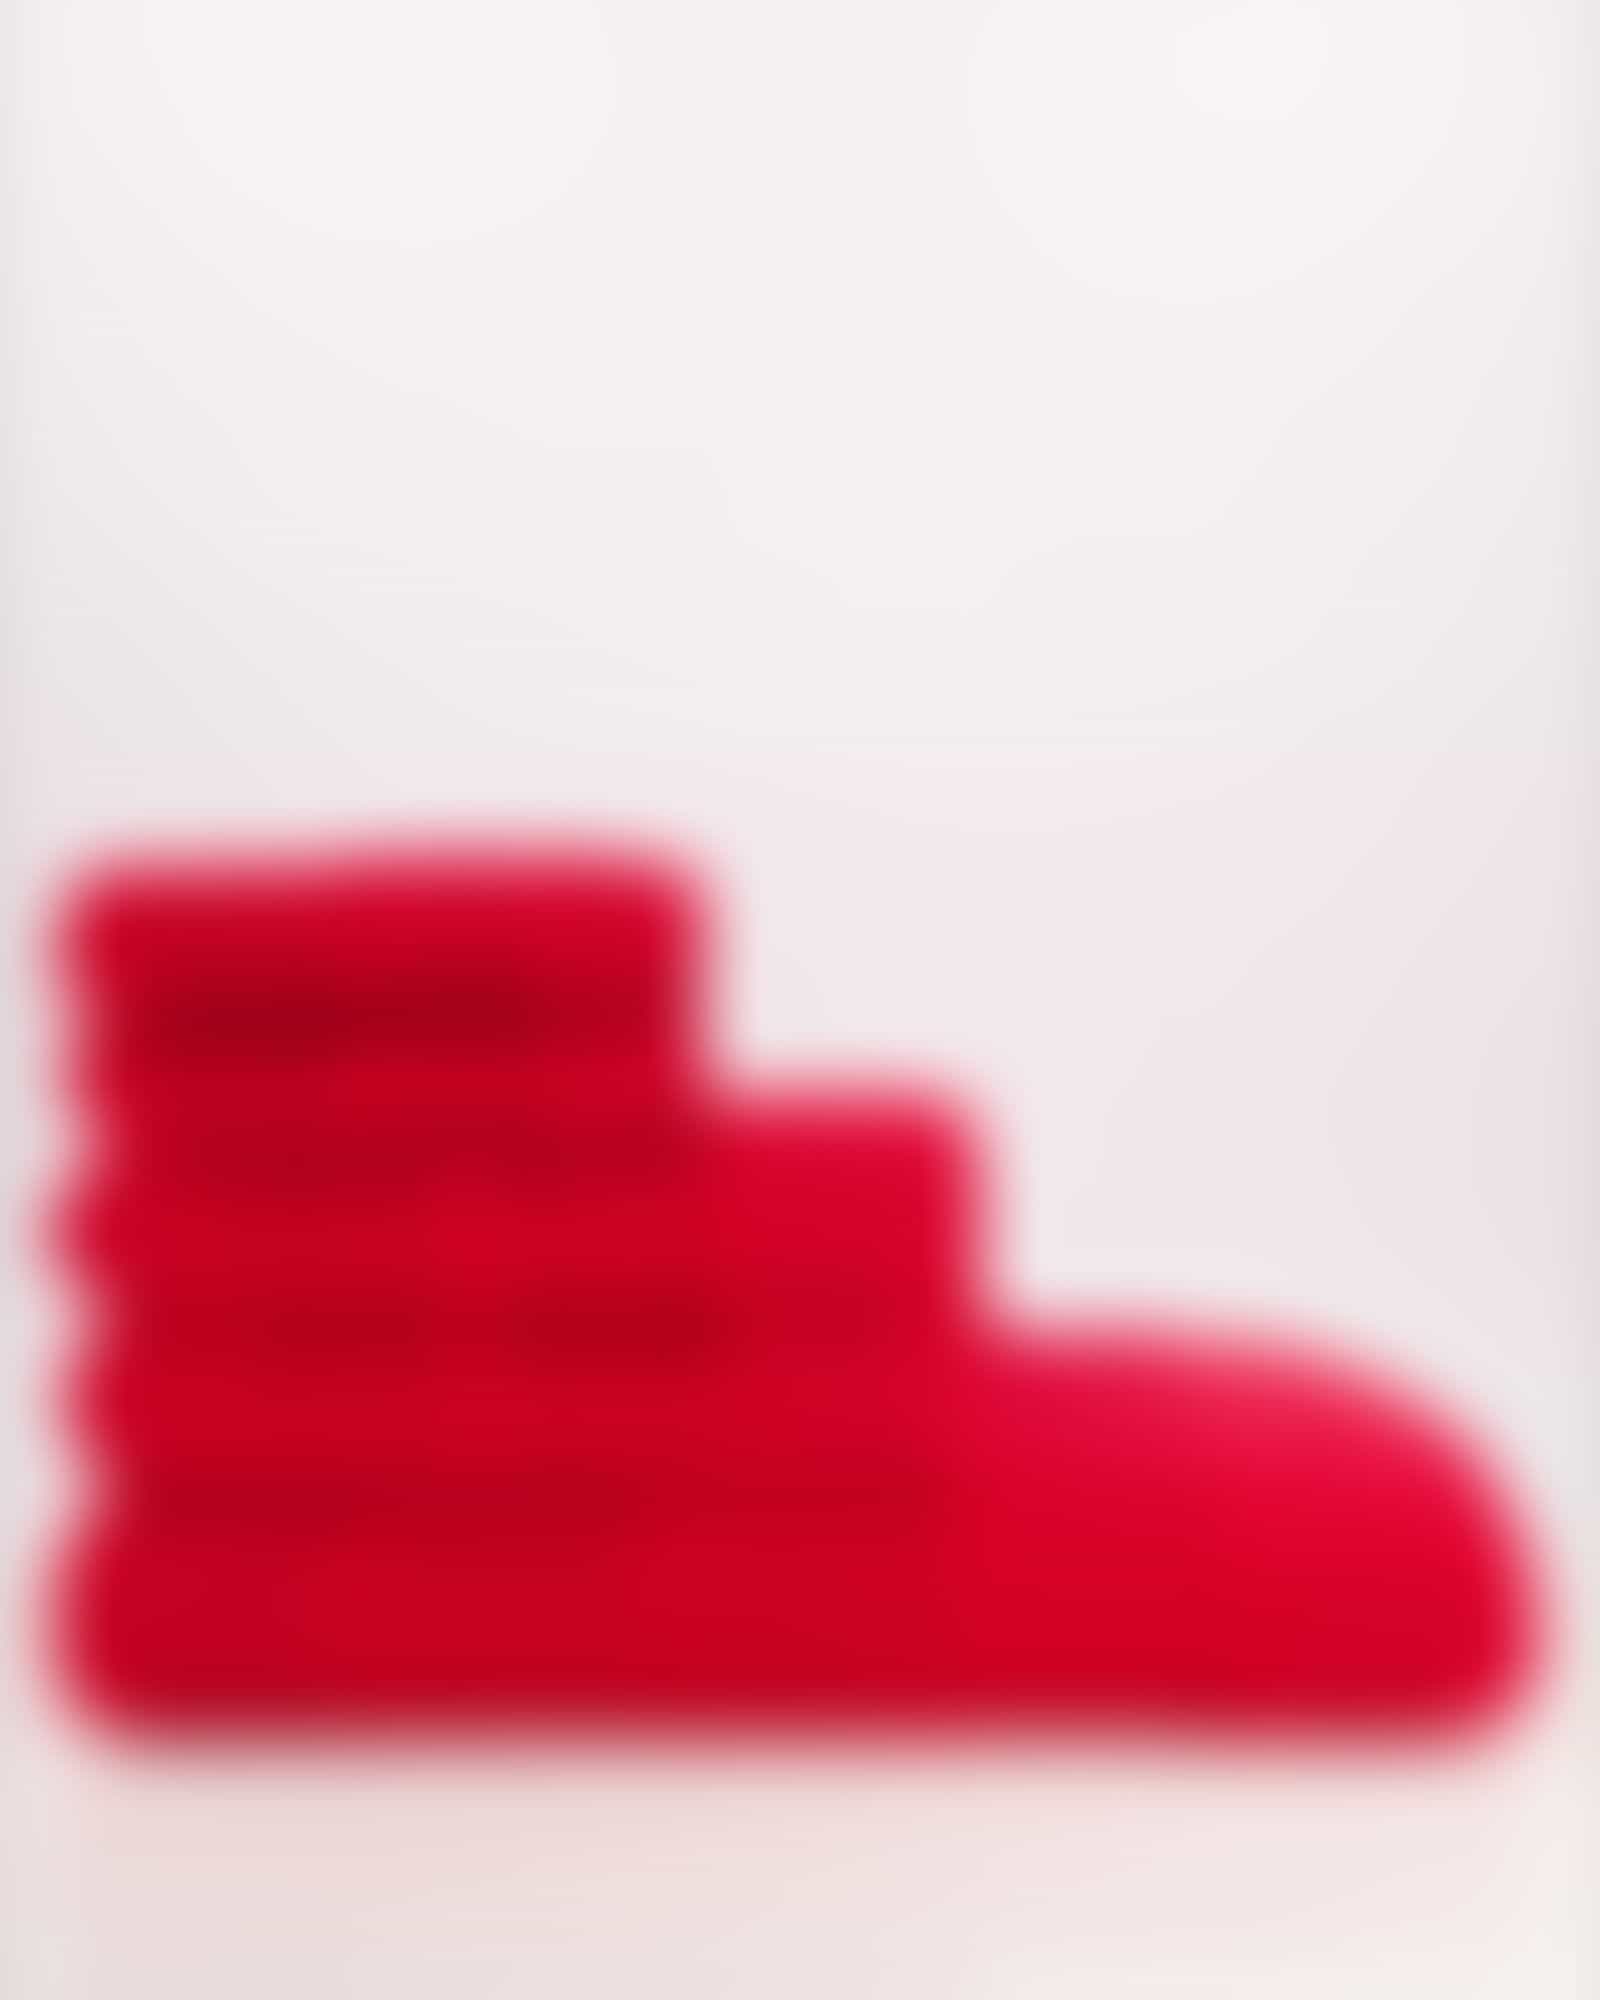 Cawö - Noblesse Uni 1001 - Farbe: 203 - rot - Waschhandschuh 16x22 cm